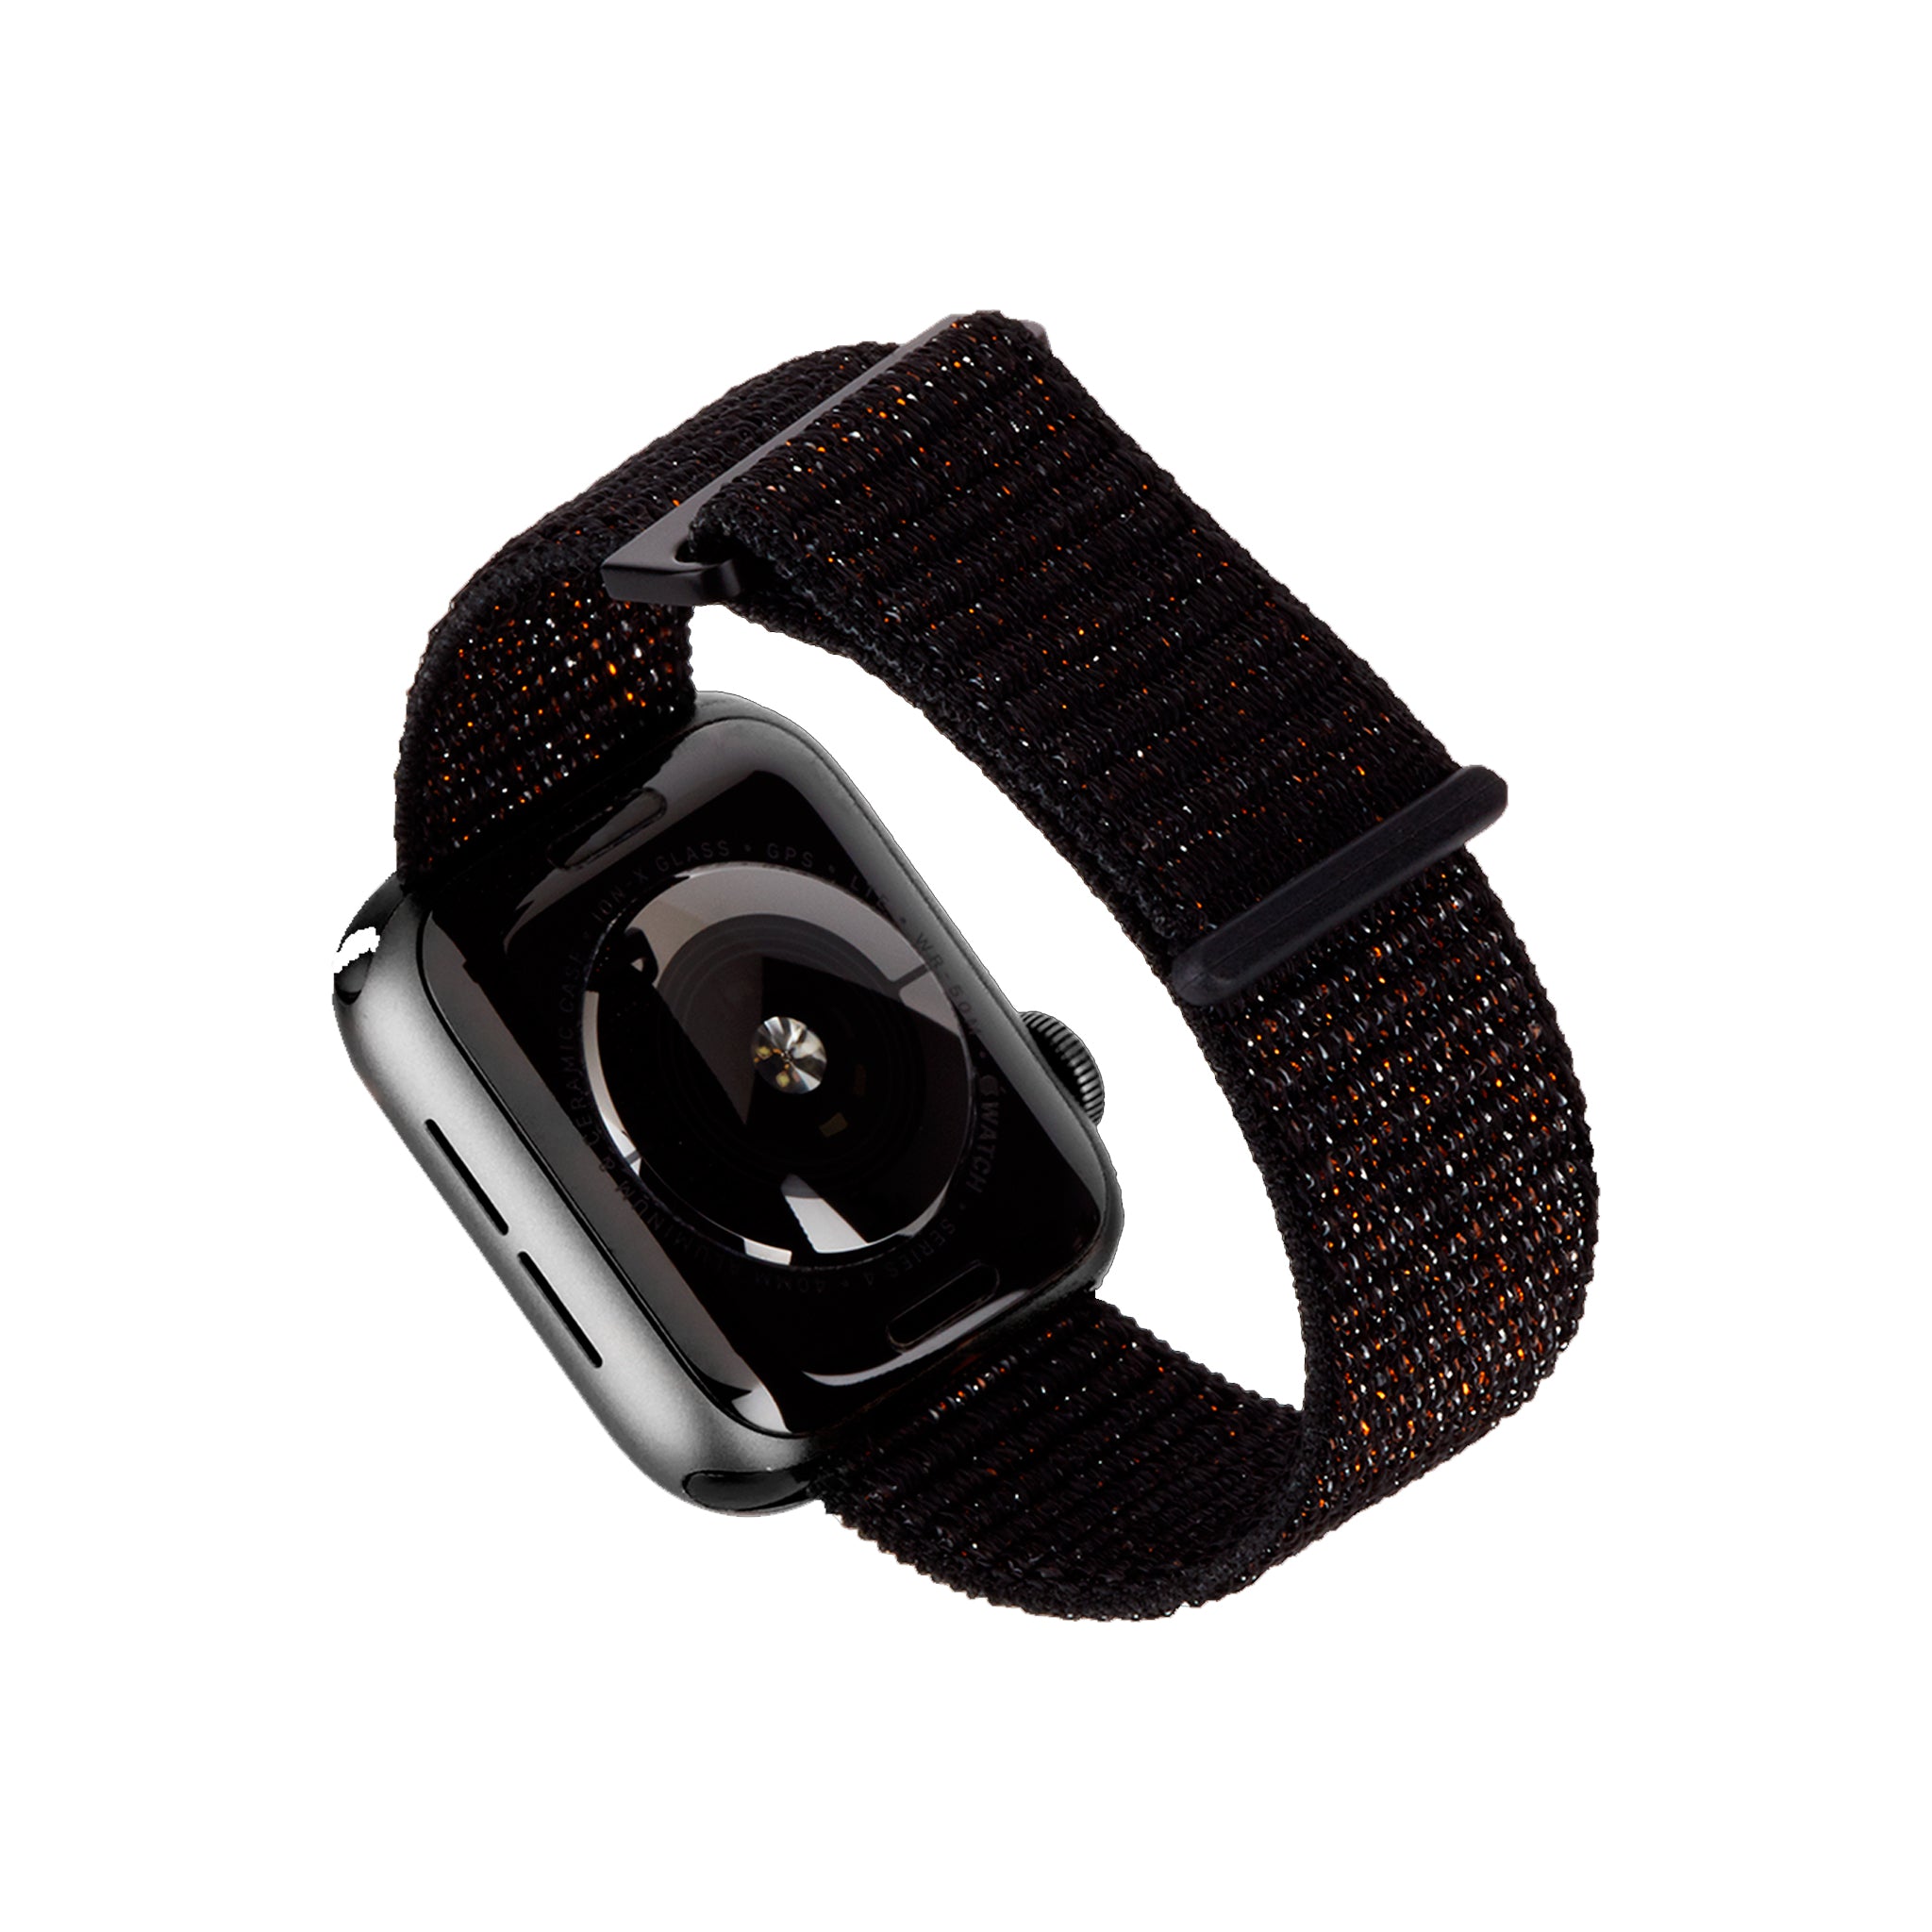 Case-mate - Nylon Watchband For Apple Watch 42mm / 44mm - Mixed Metallic Black